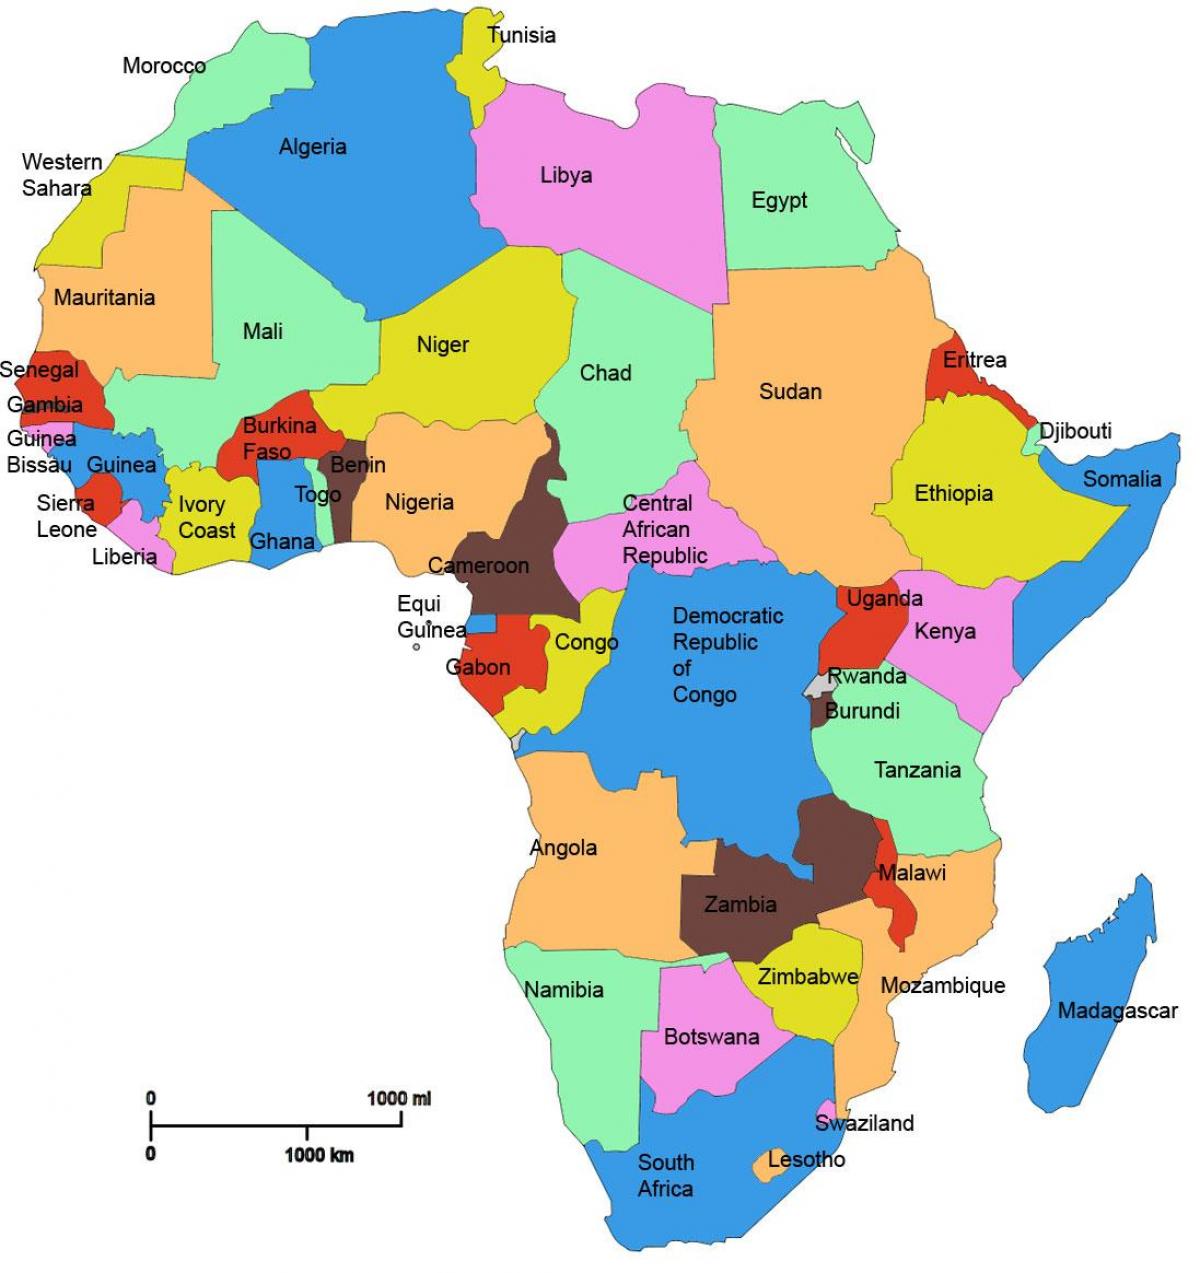 mapa de áfrica mostrando tanzania